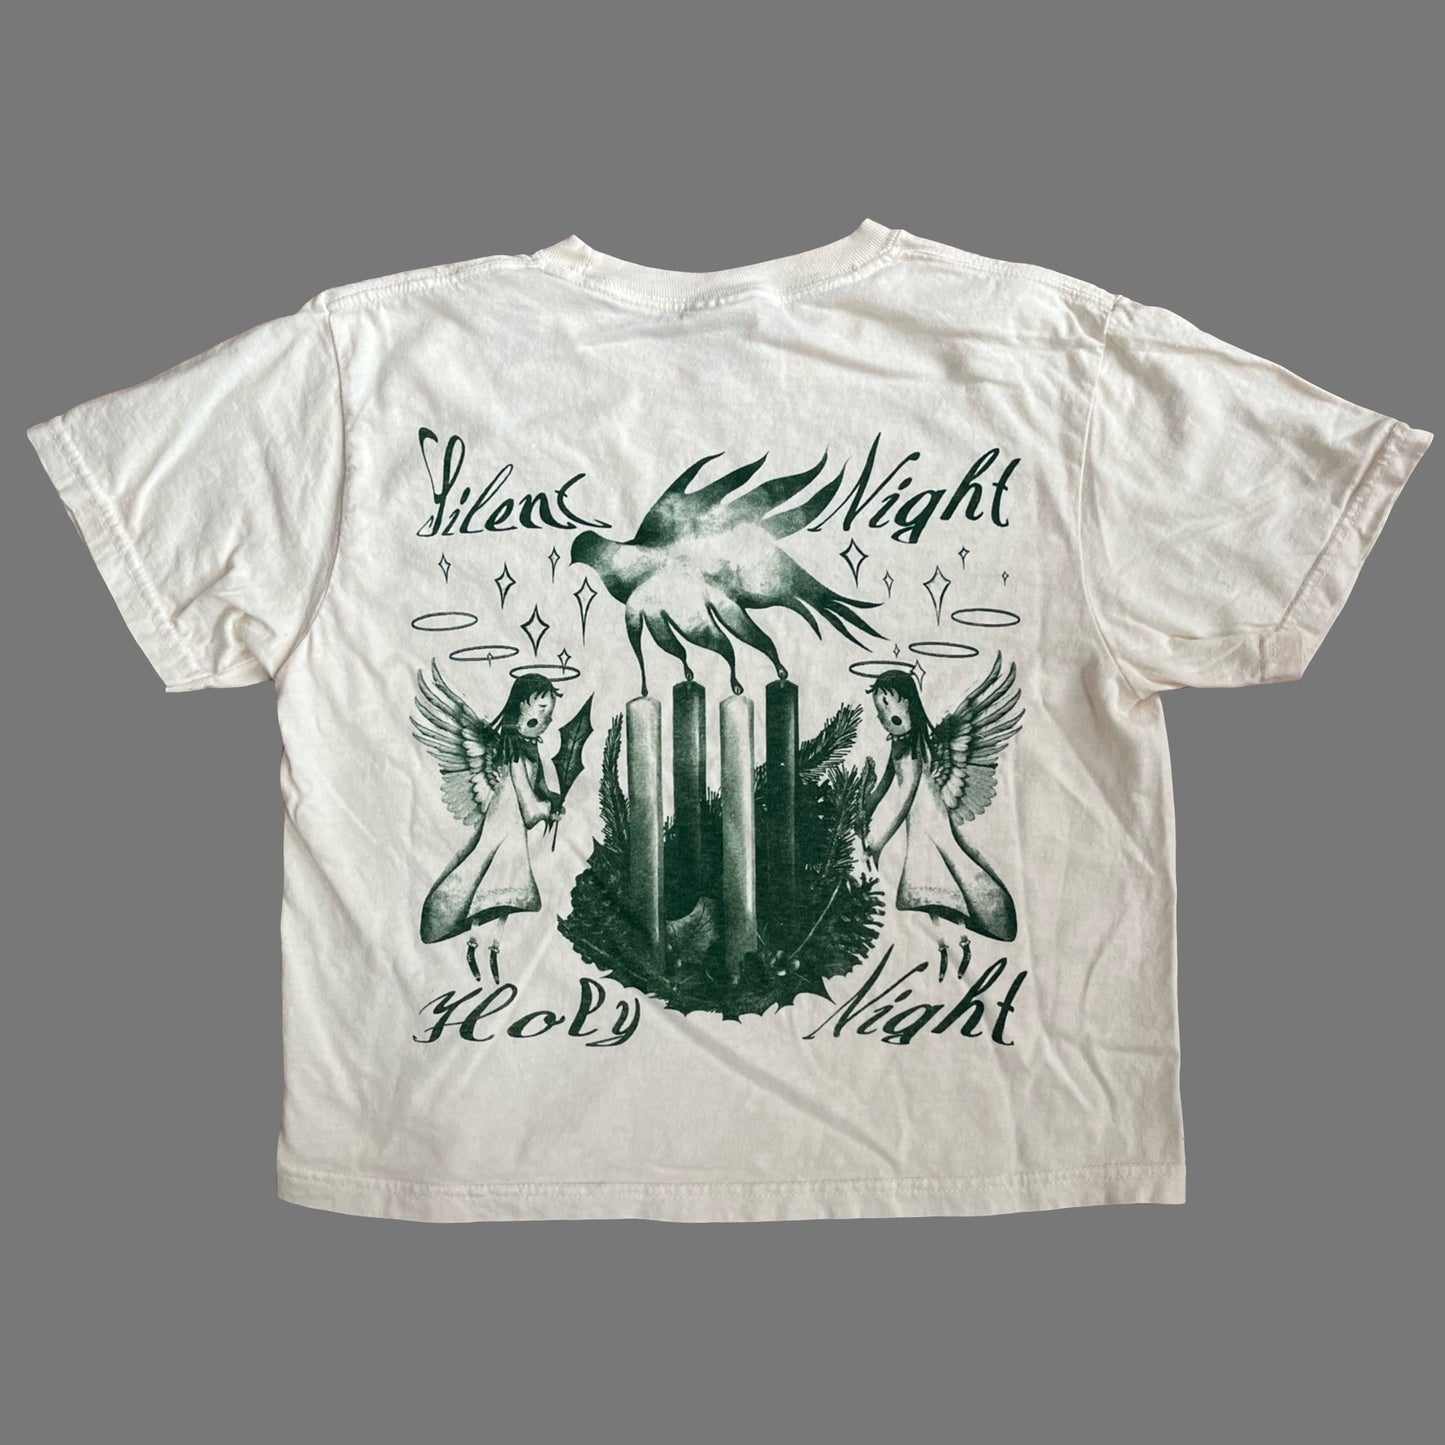 Silent Night T-Shirt